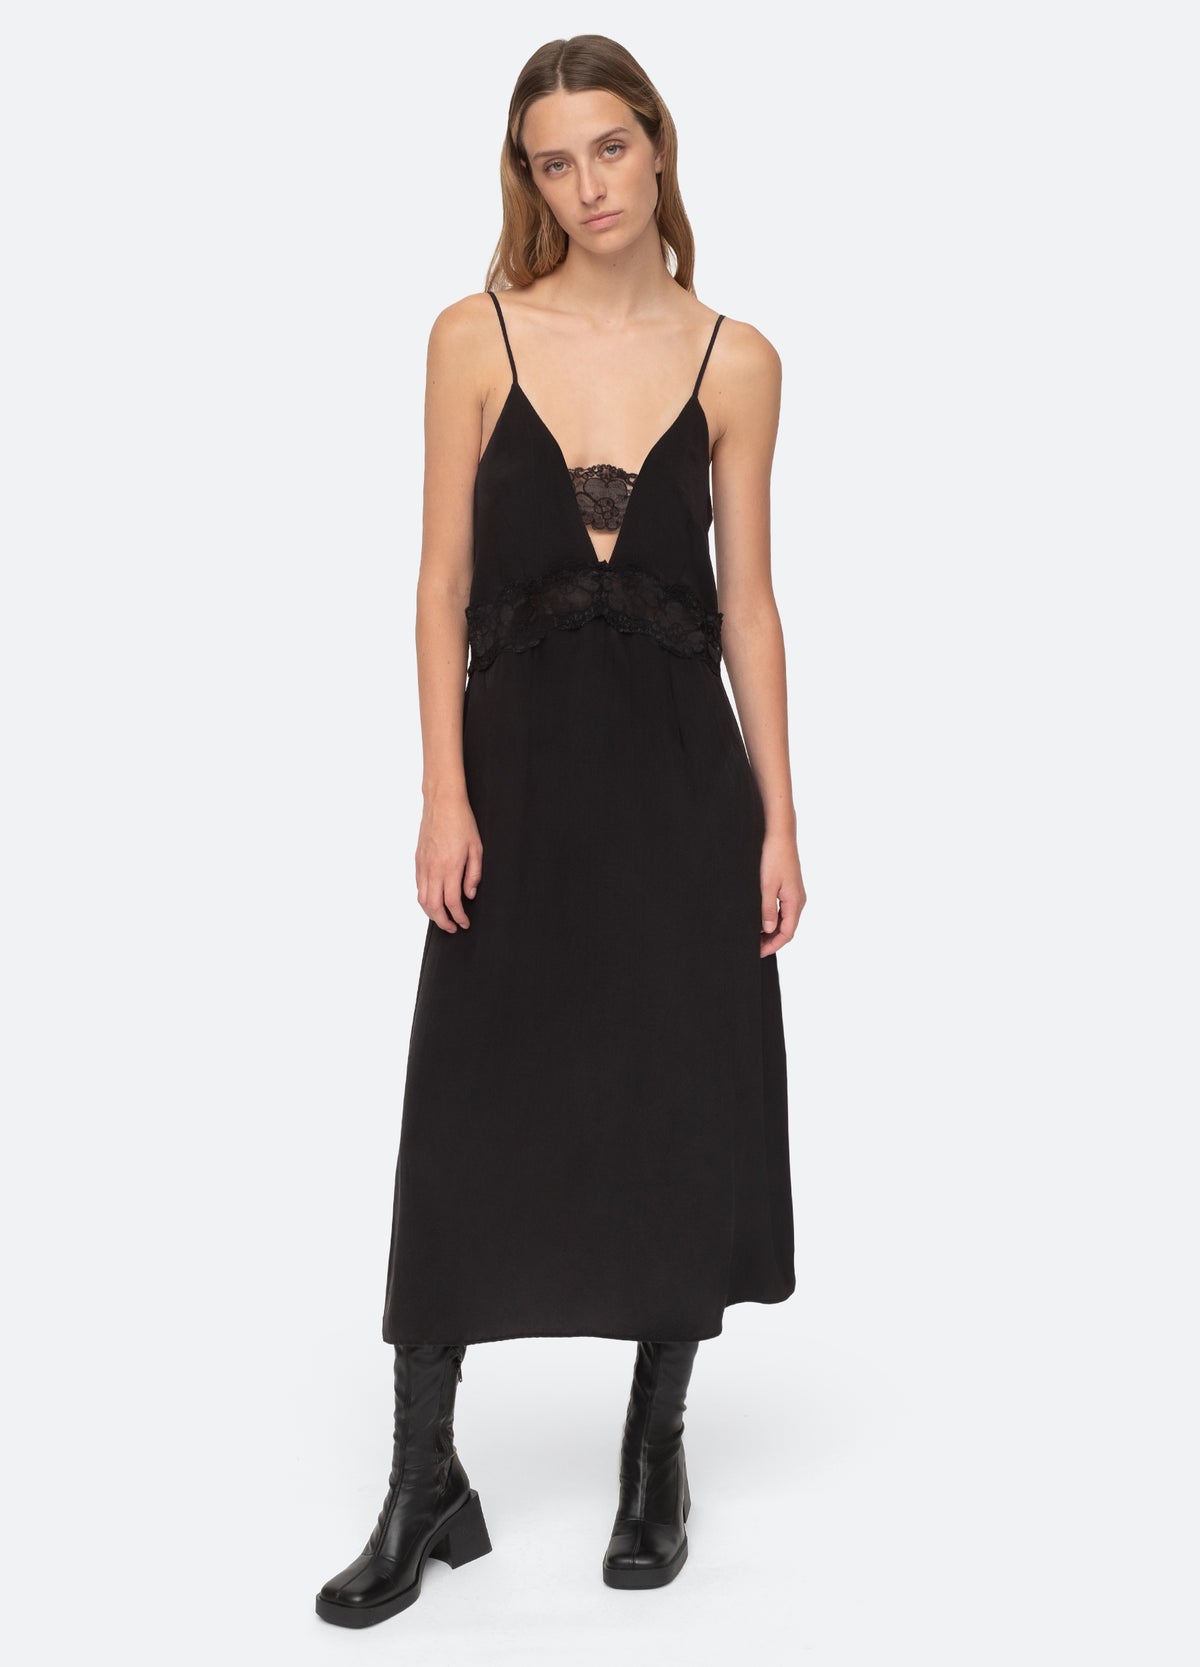 Black Lace French Style Midi Slip Dress